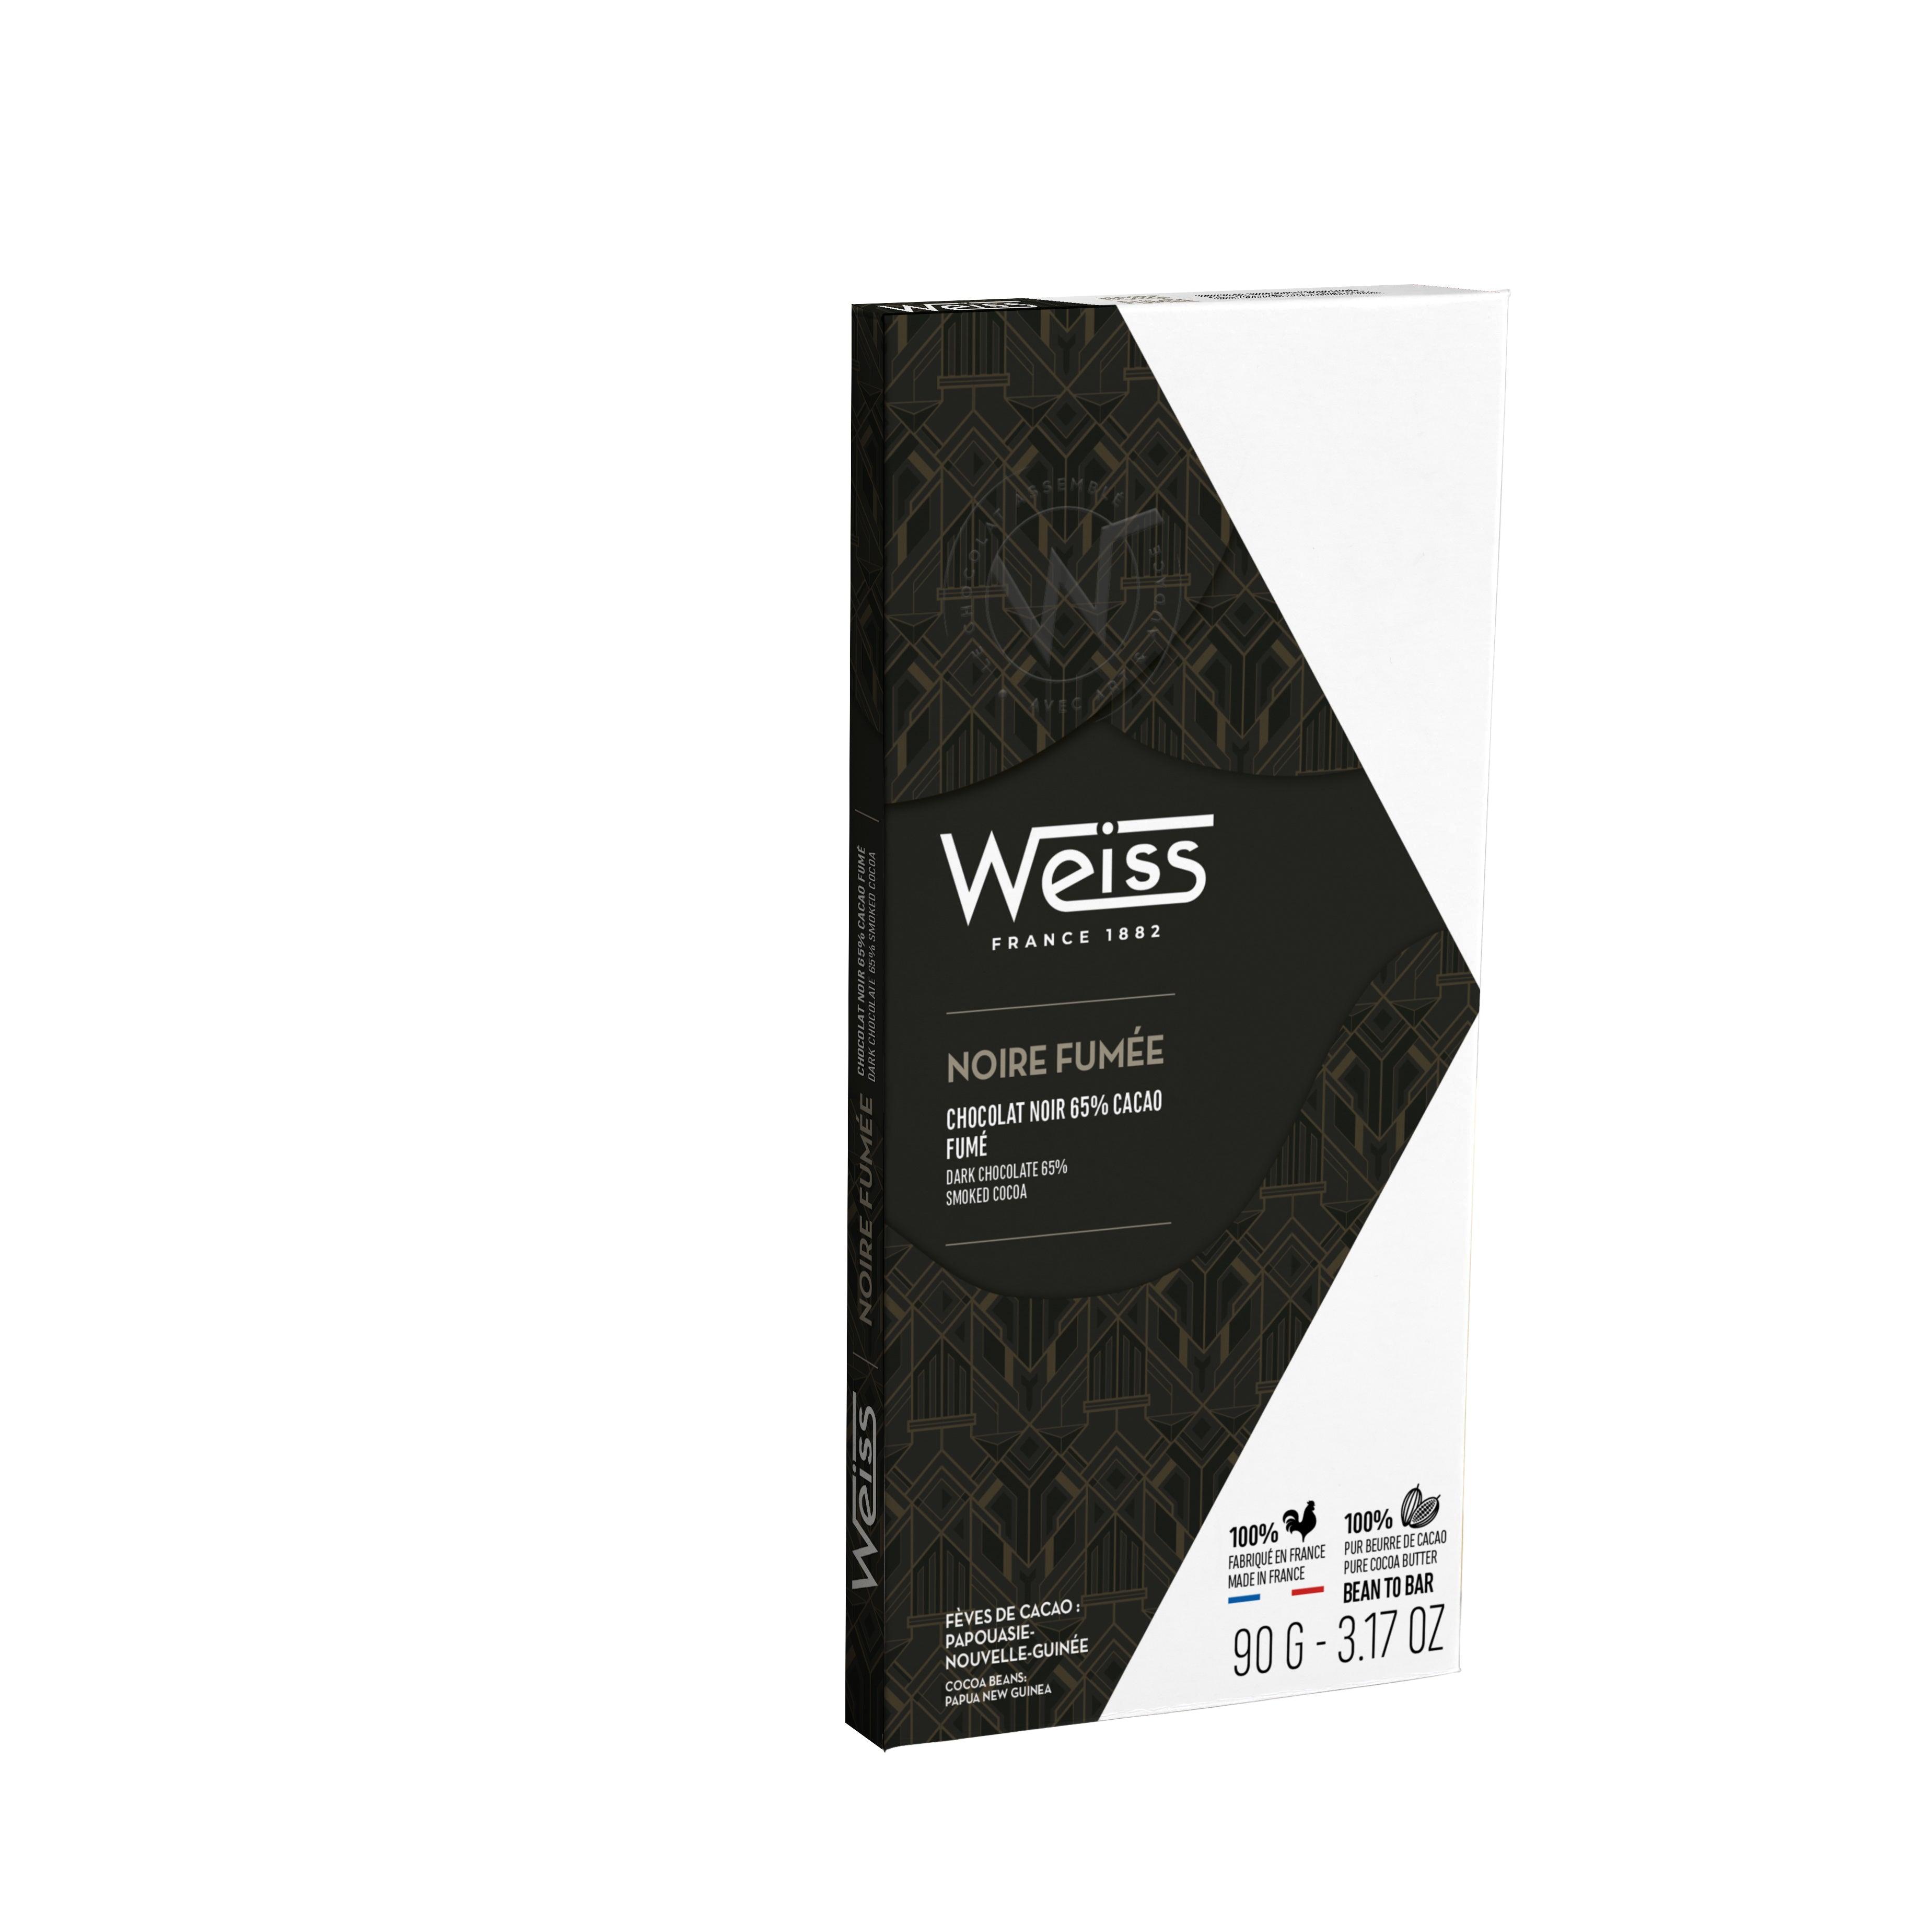 Chocolat Weiss